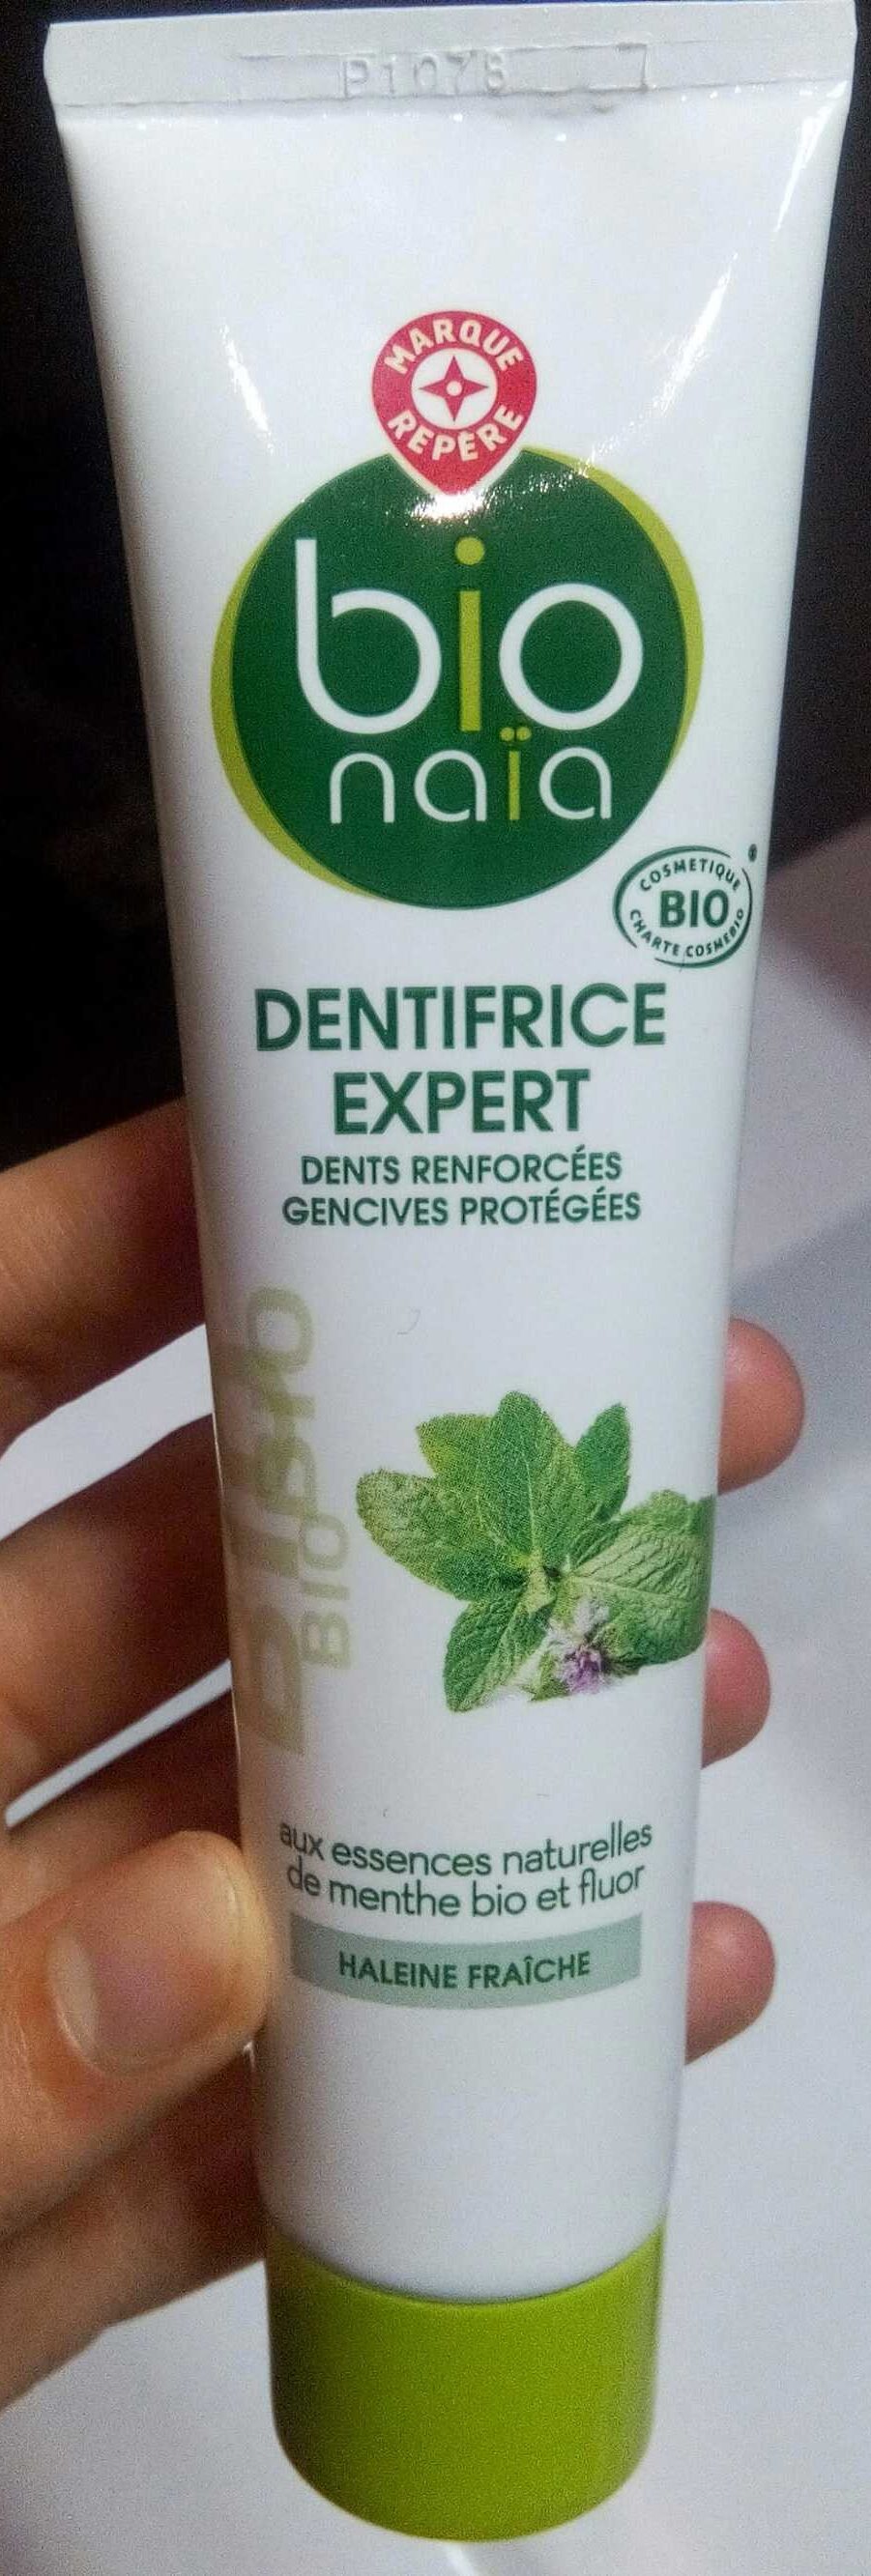 Dentifrice expert - Produit - fr